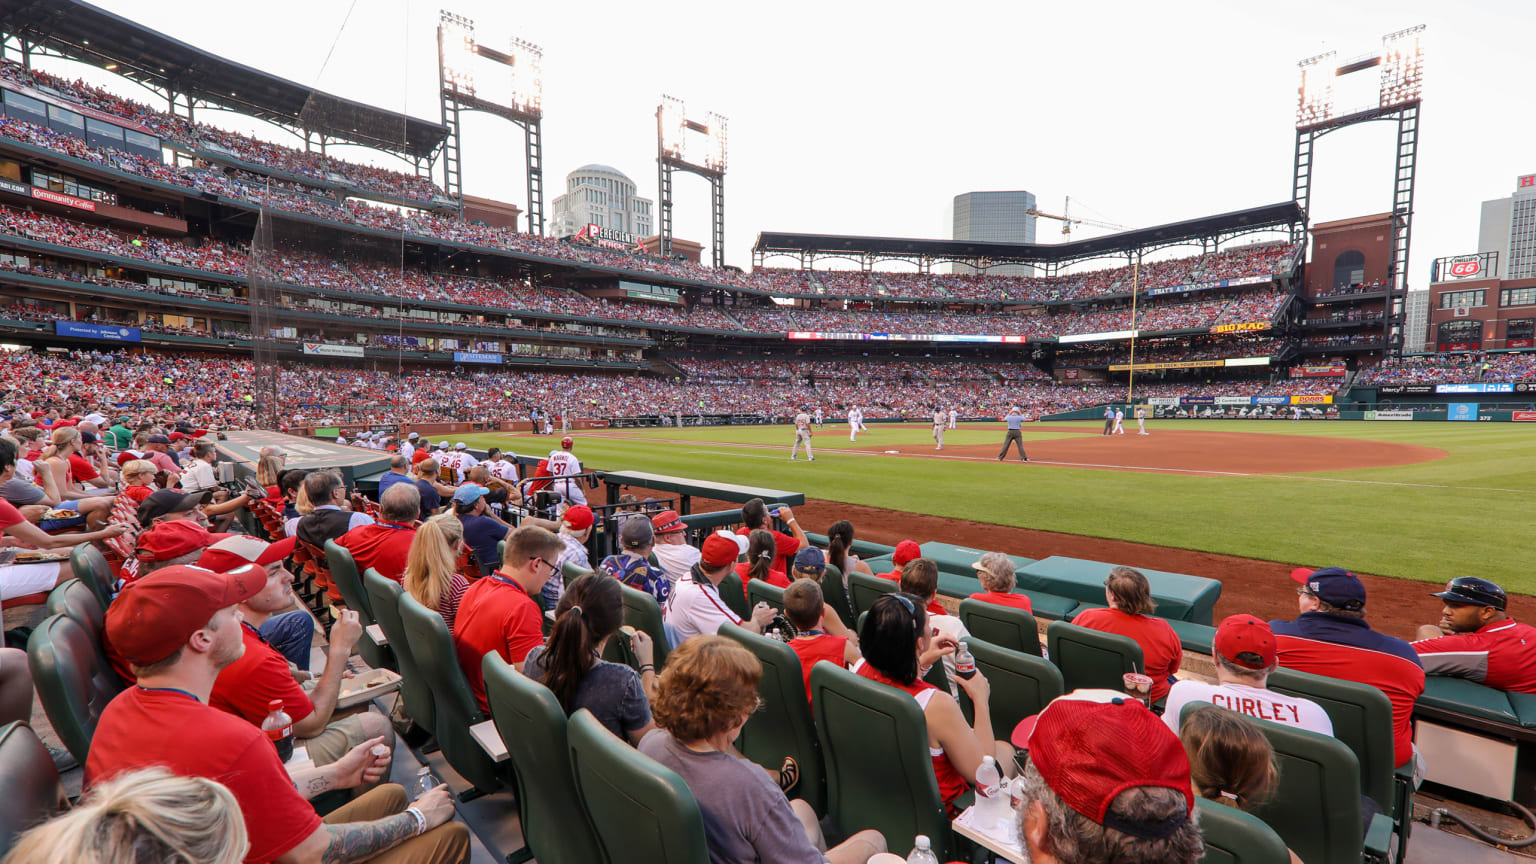 St. Louis Cardinals Fanatics Branded Iconic Busch Stadium to